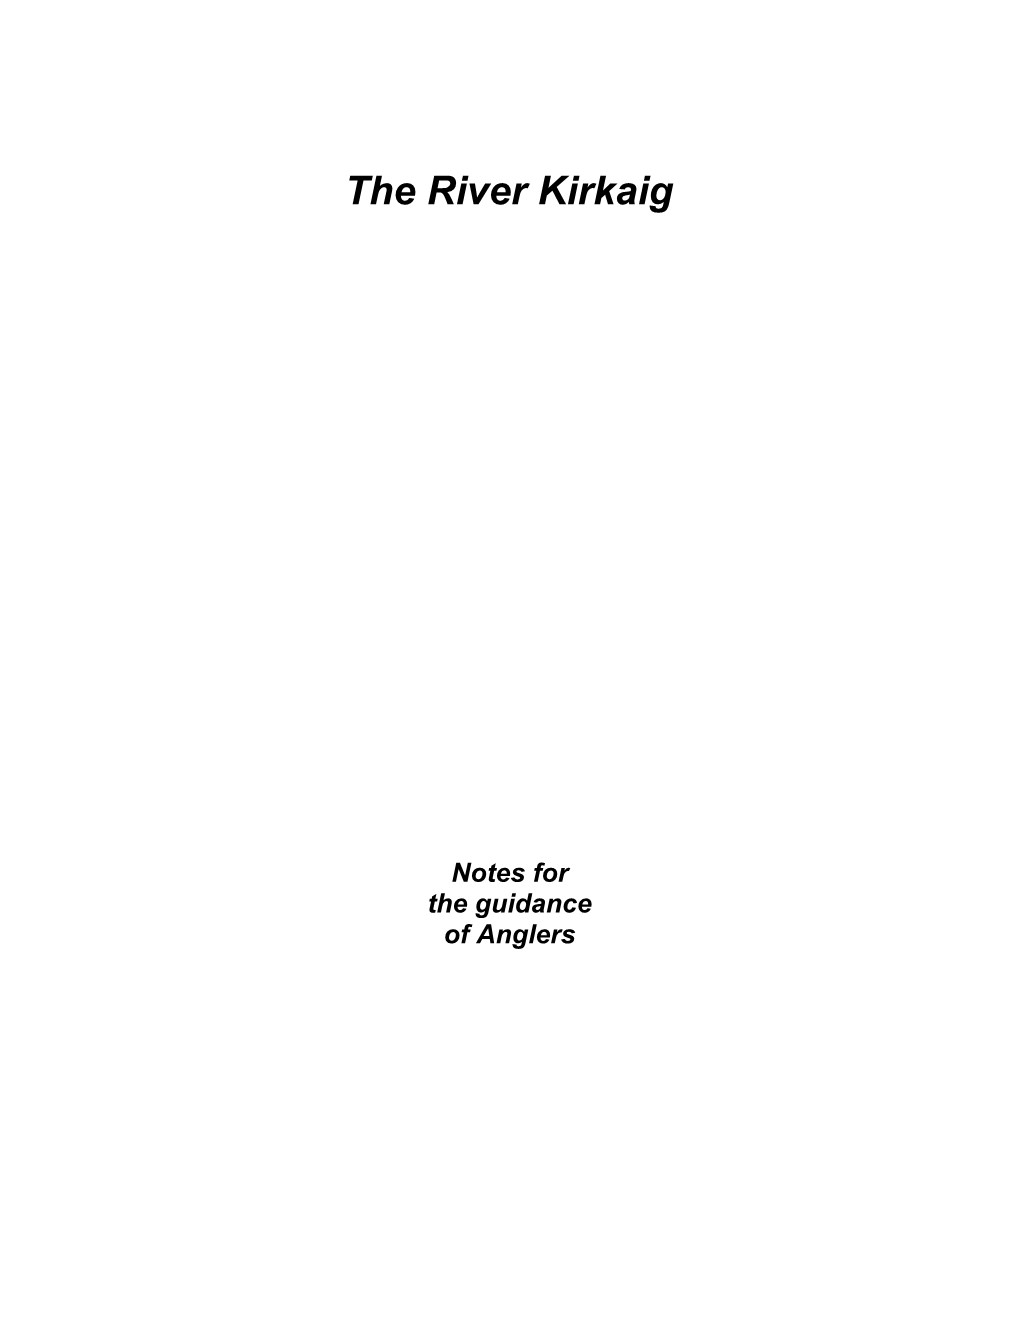 The River Kirkaig